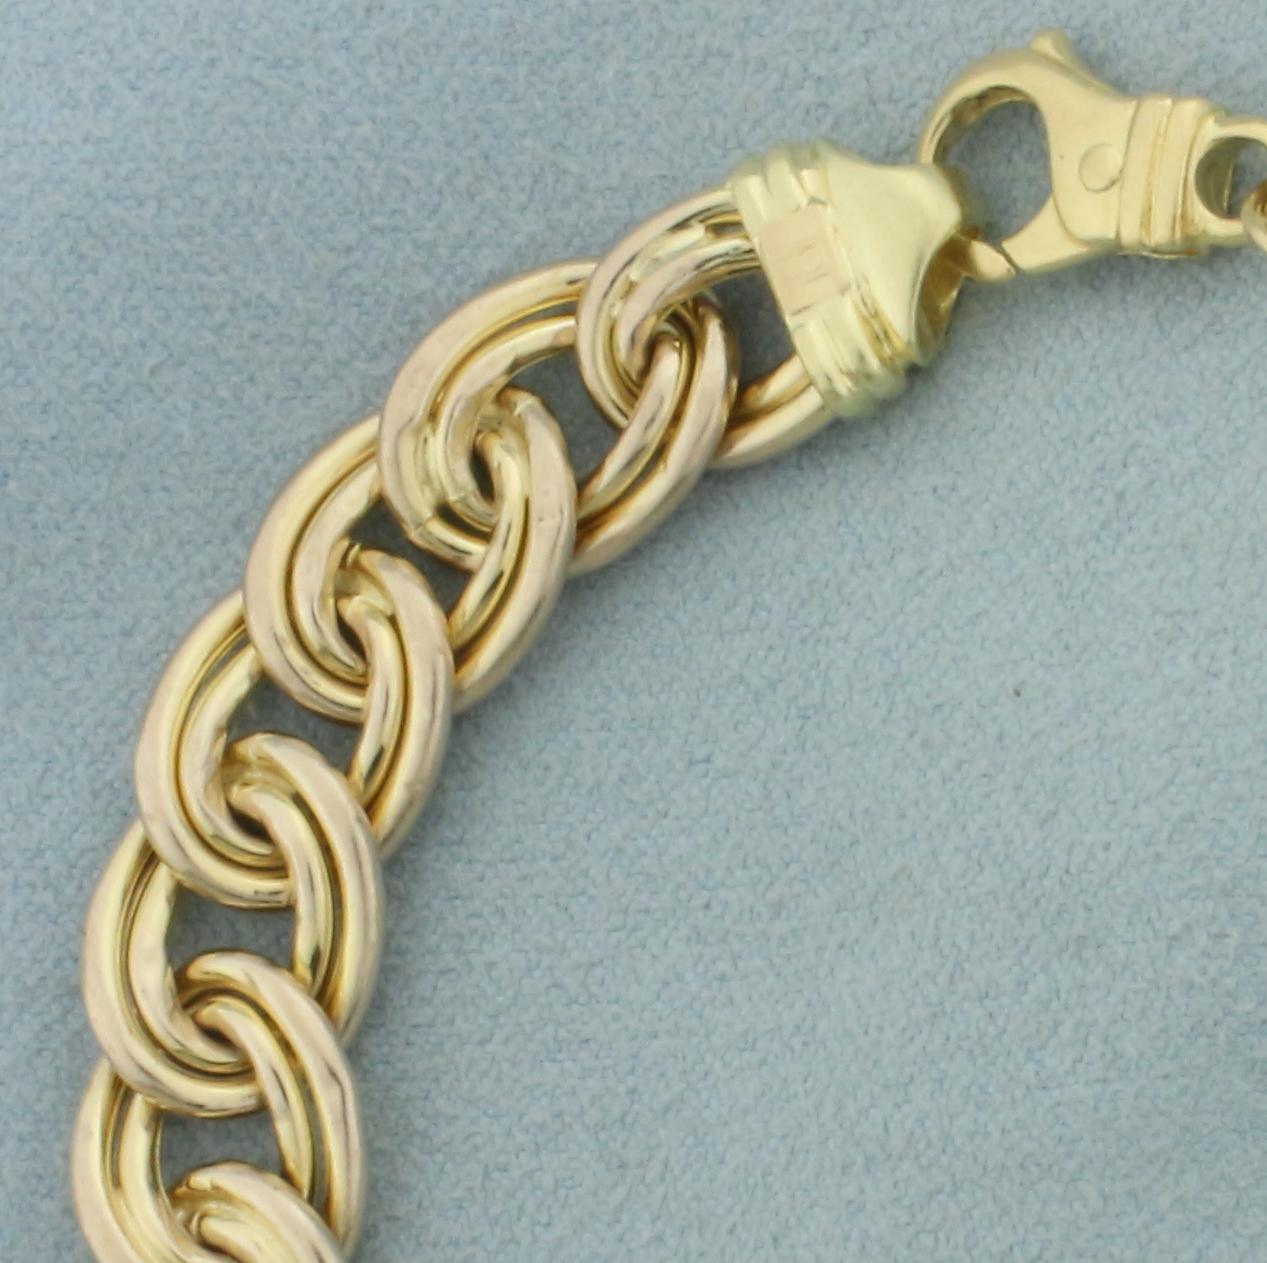 Italian Double Circle Link Bracelet In 14k Yellow Gold